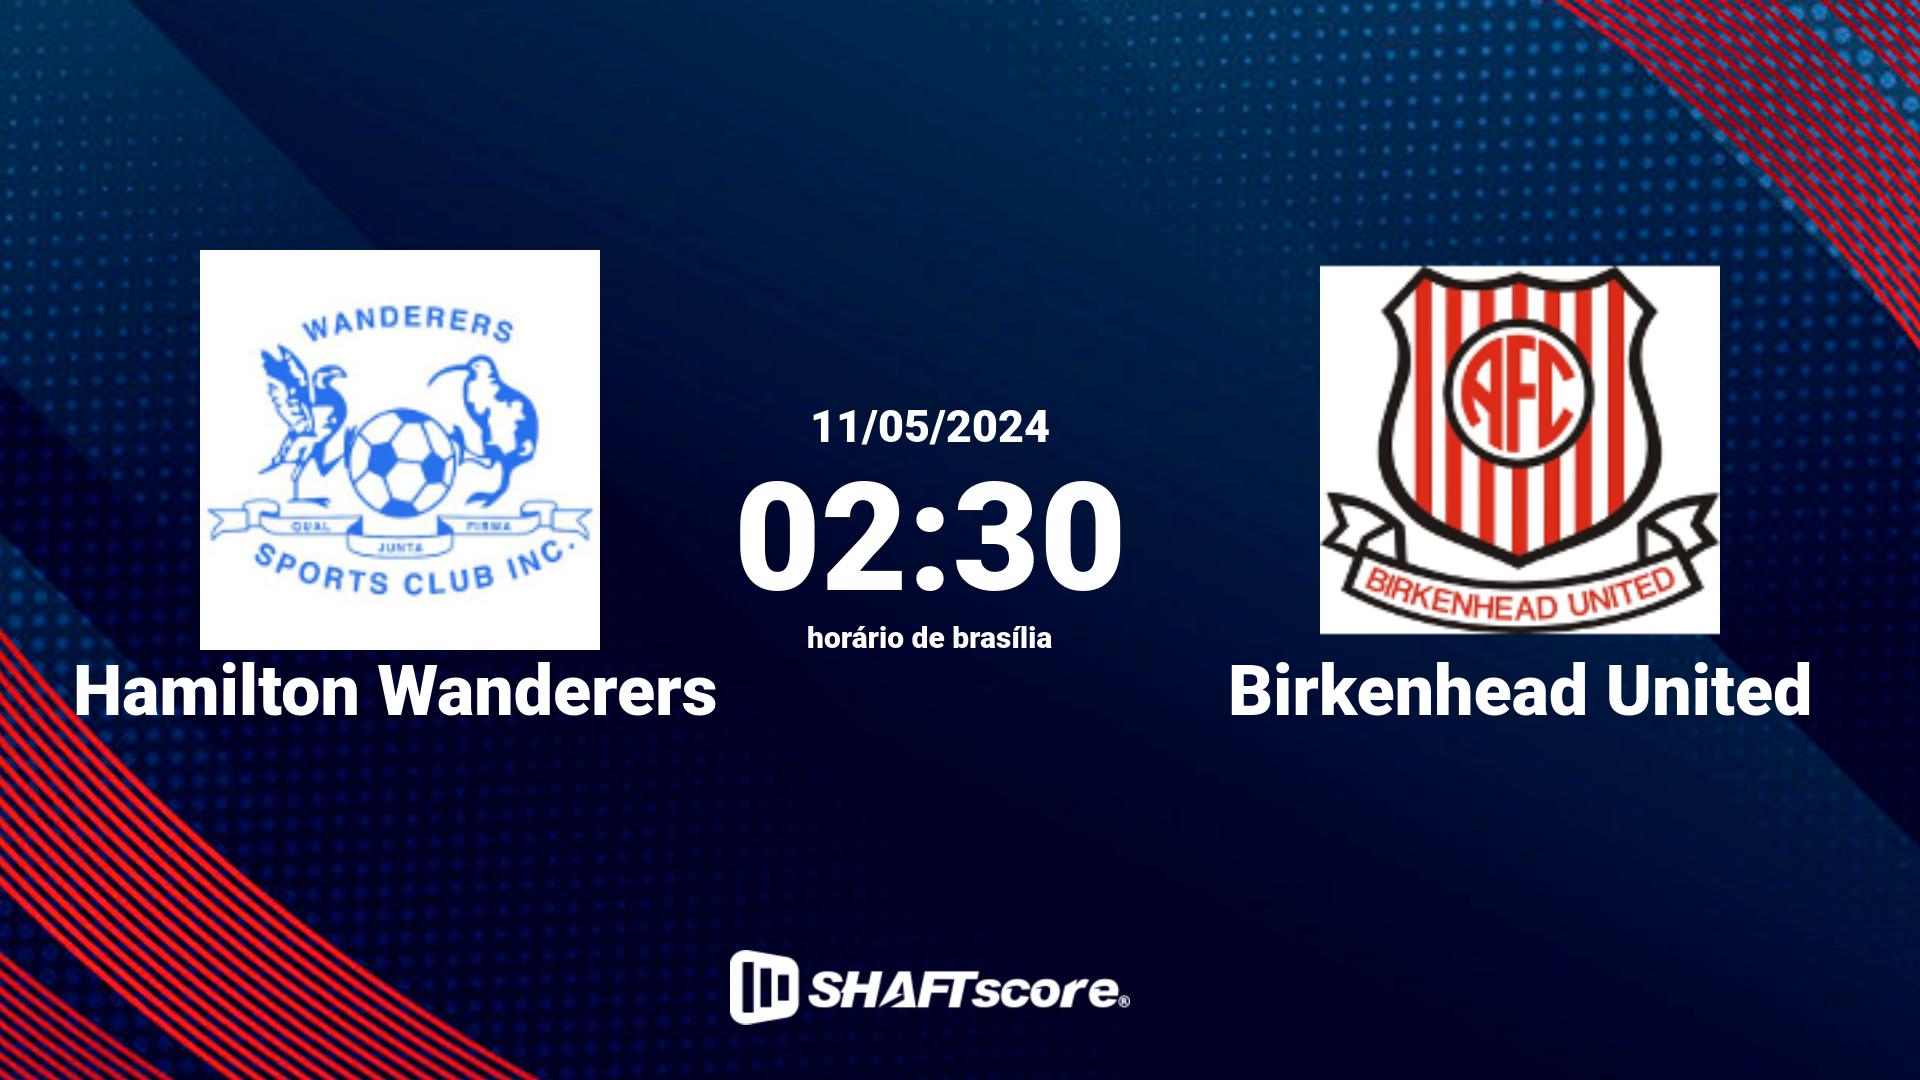 Estatísticas do jogo Hamilton Wanderers vs Birkenhead United 11.05 02:30